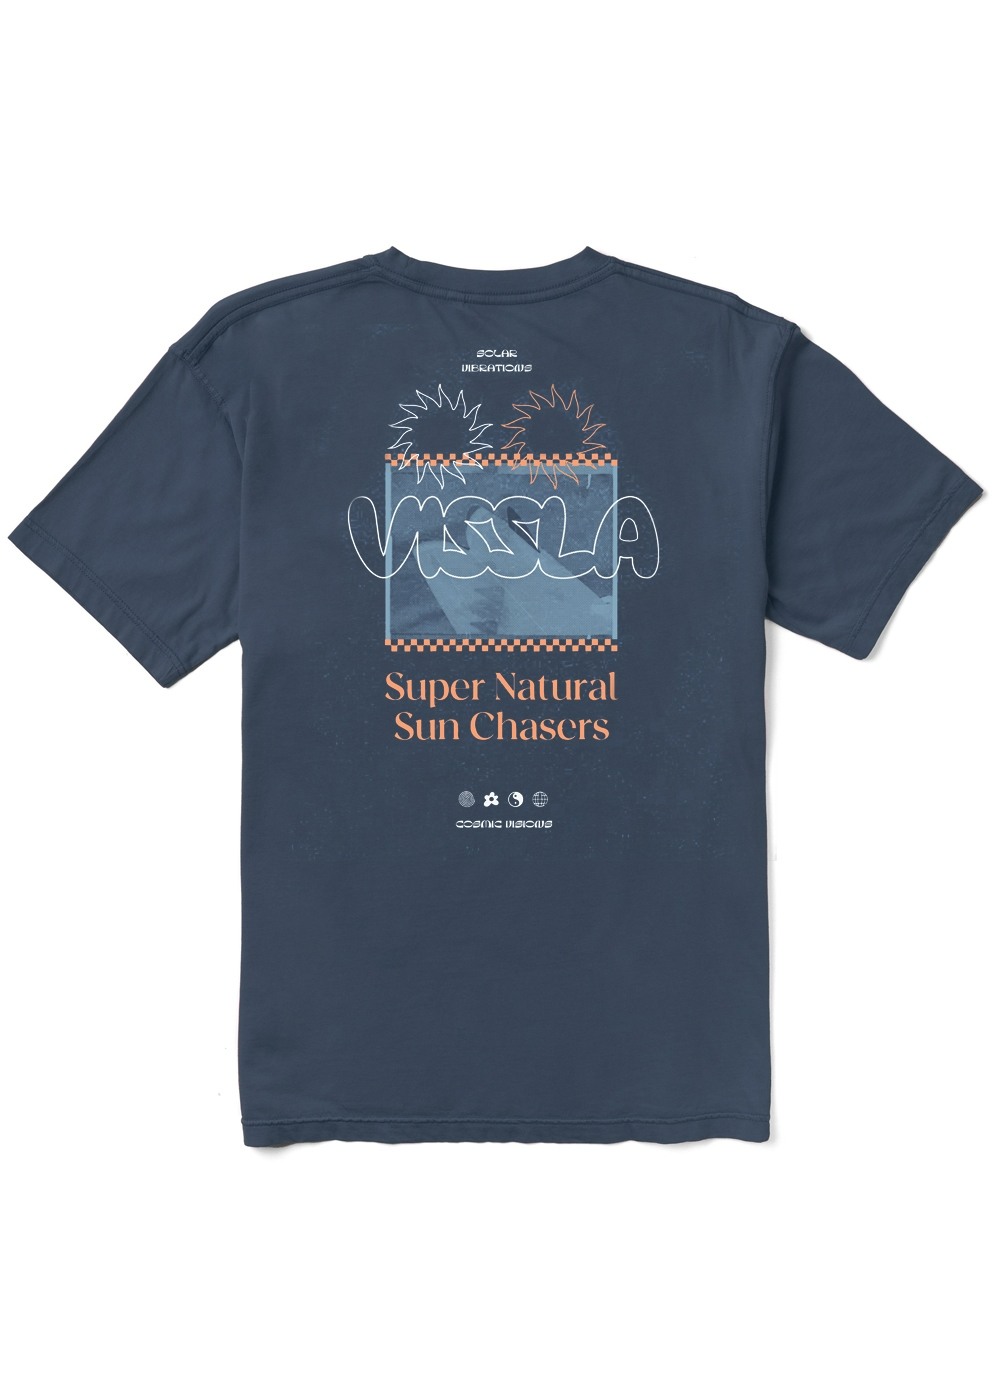 Camiseta manga corta VISSLA  |  Super Cosmics  Organic